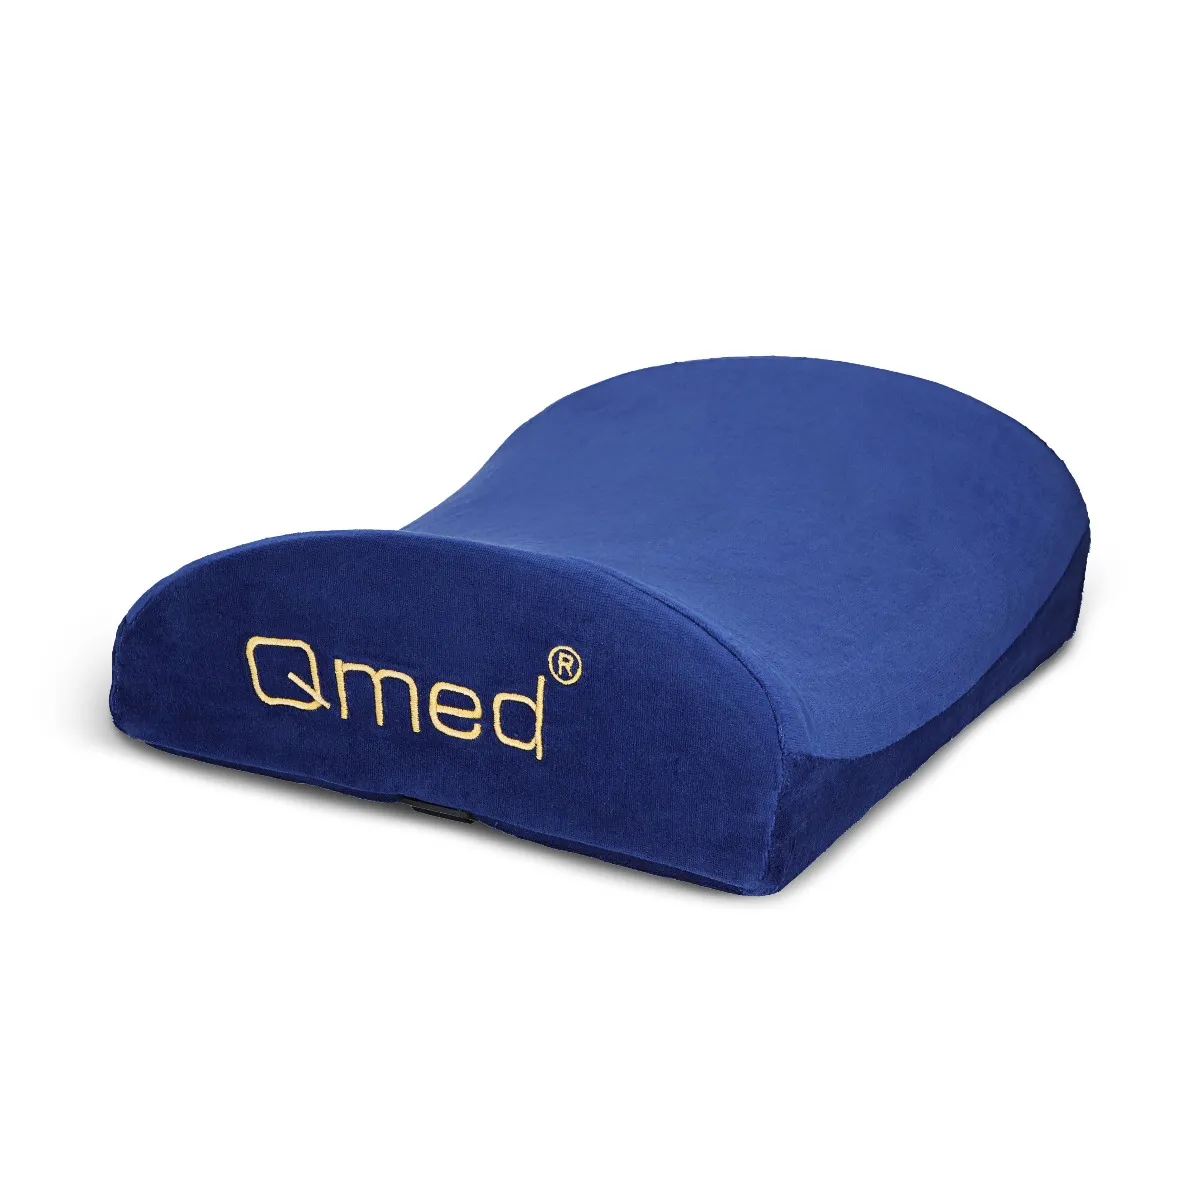 Qmed Lumbar Support Pillow poduszka lędźwiowa 